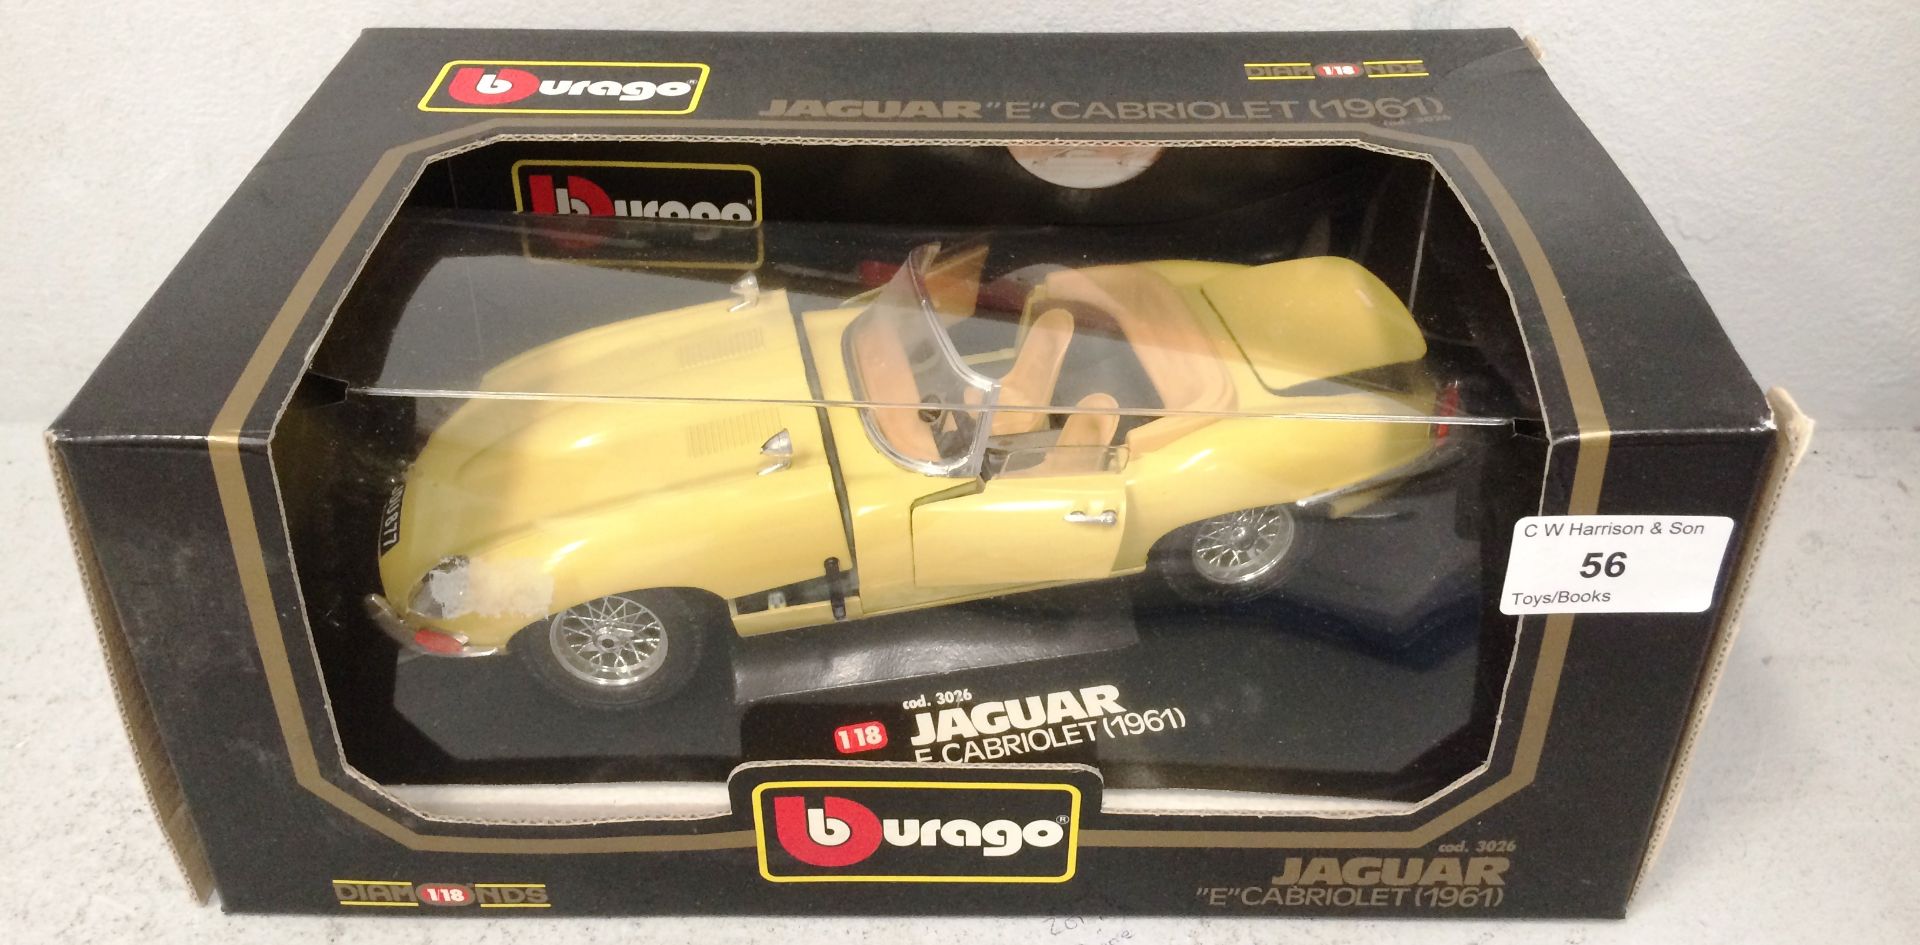 Burago 1/18 scale die cast metal model of Jaguar E Cabriolet (1961) (boxed)